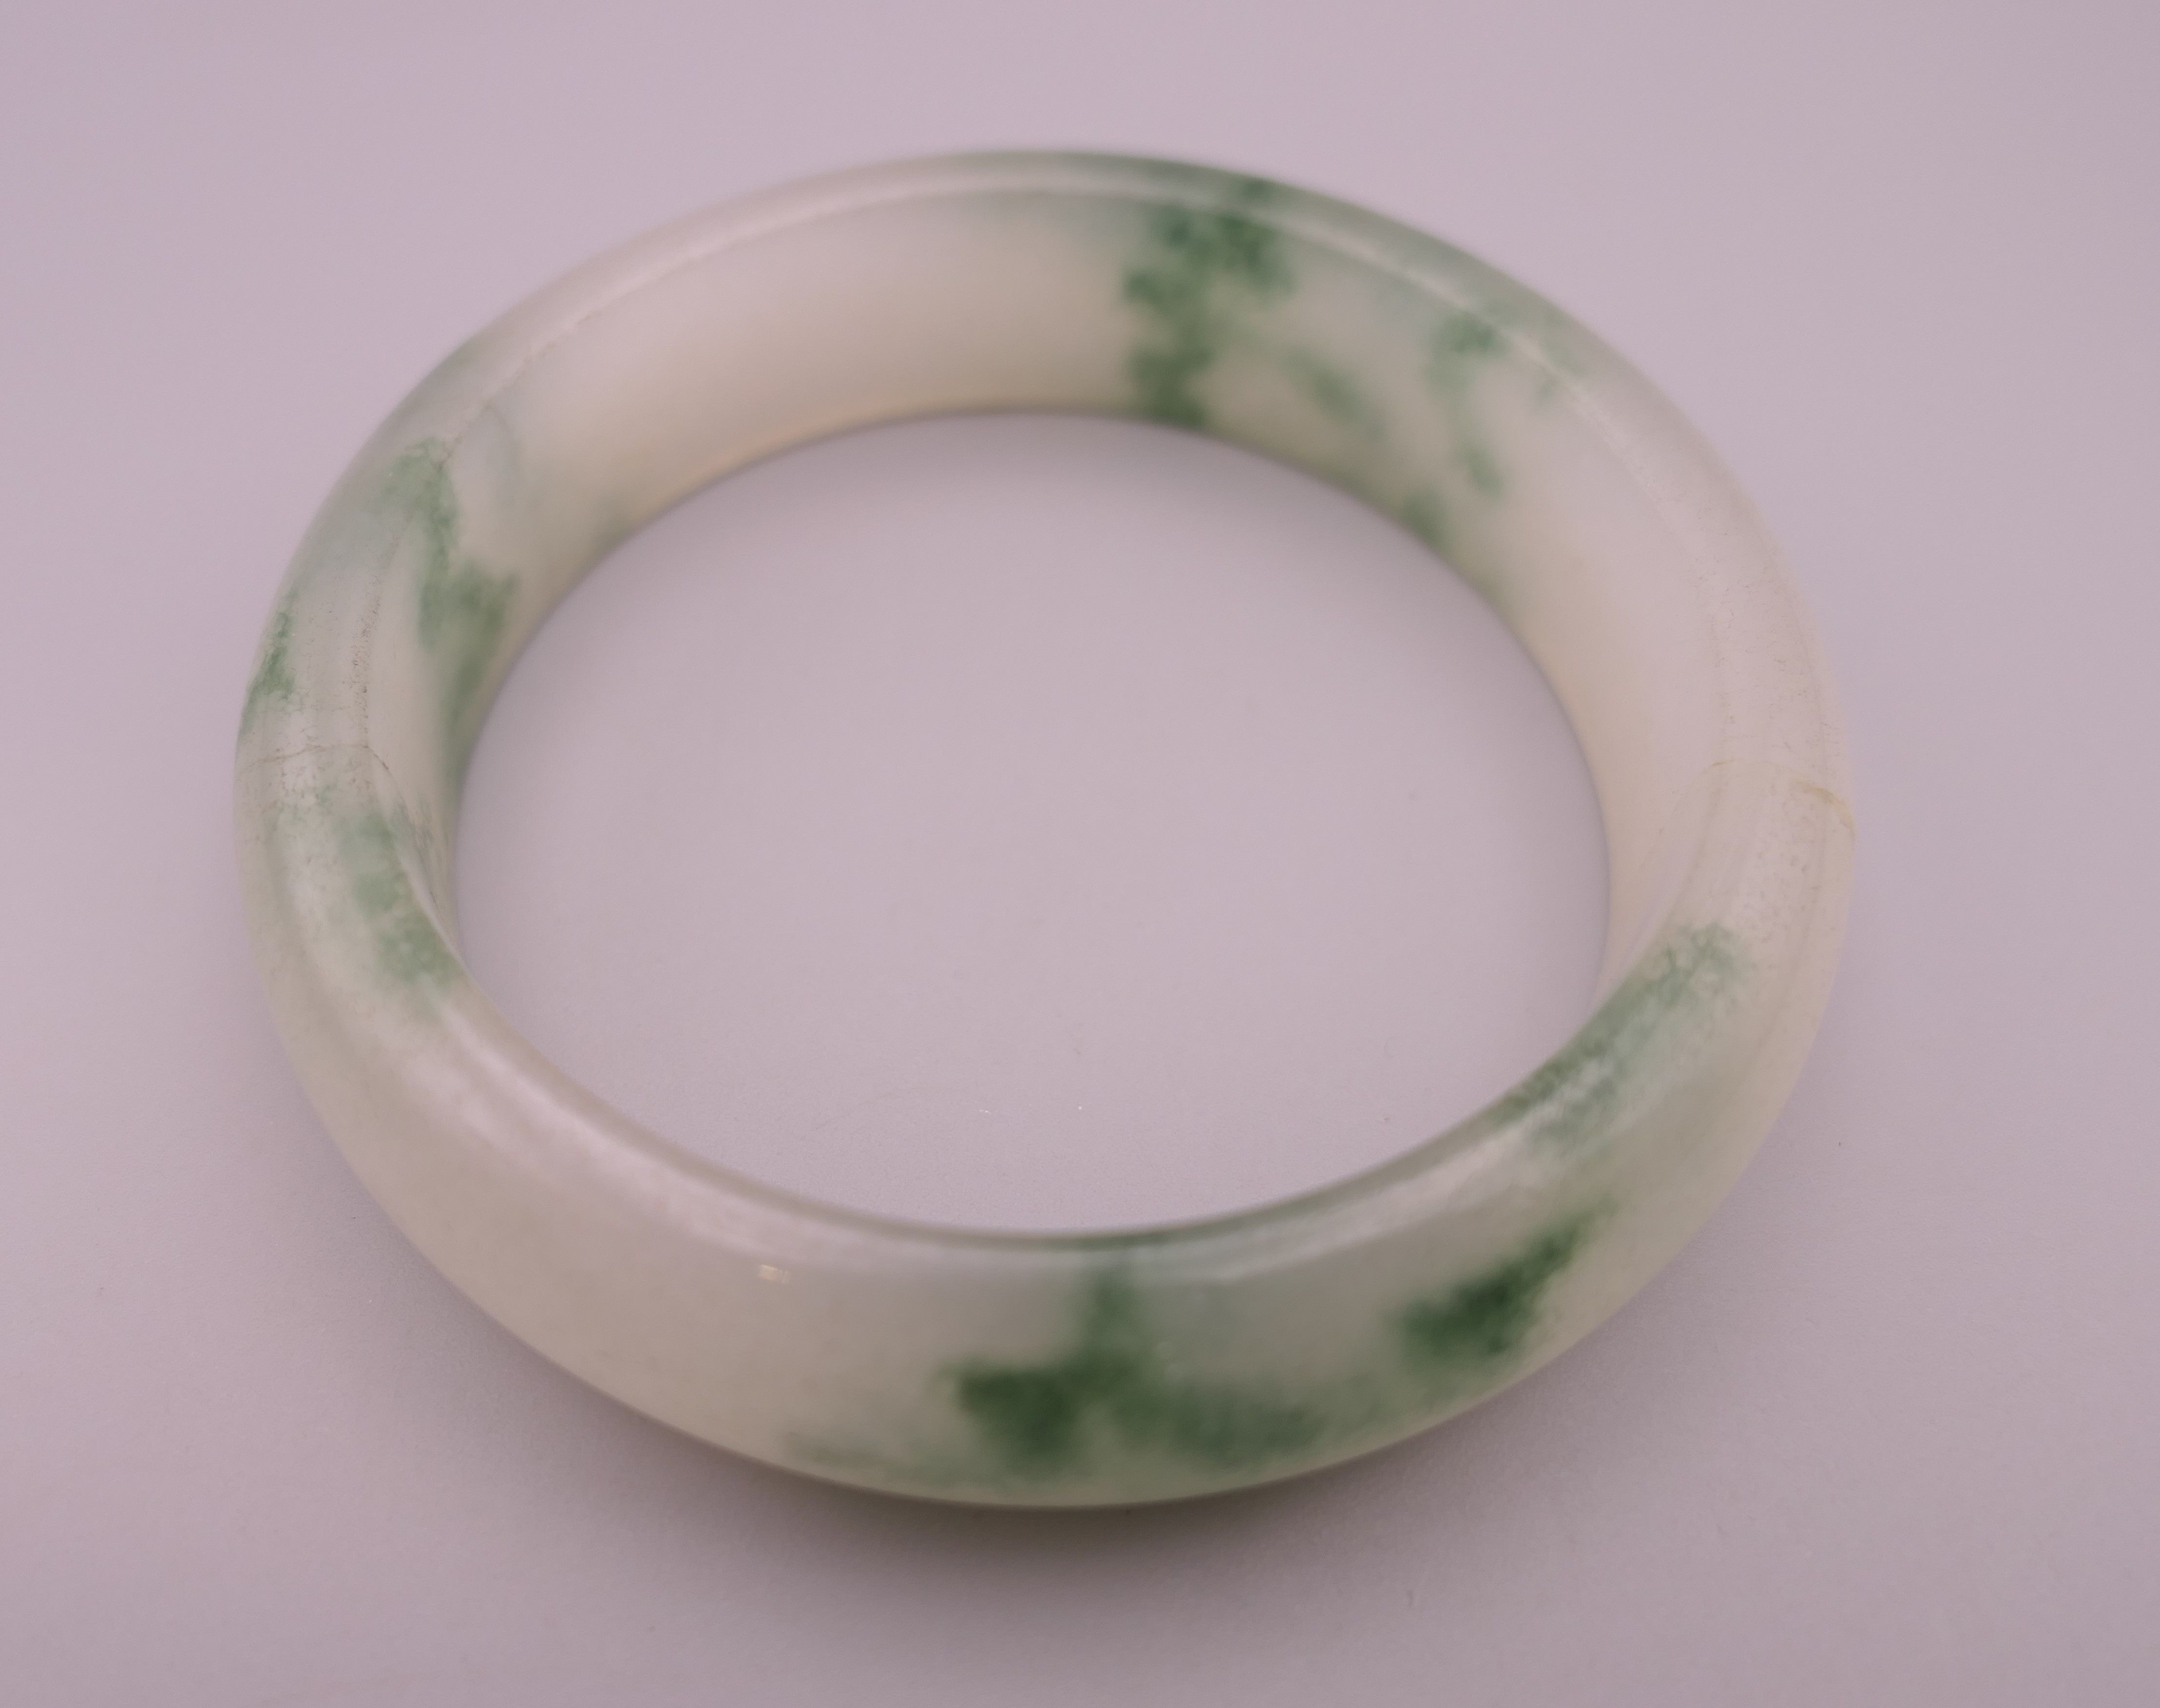 A jade bangle. Internal diameter 5.75 cm.